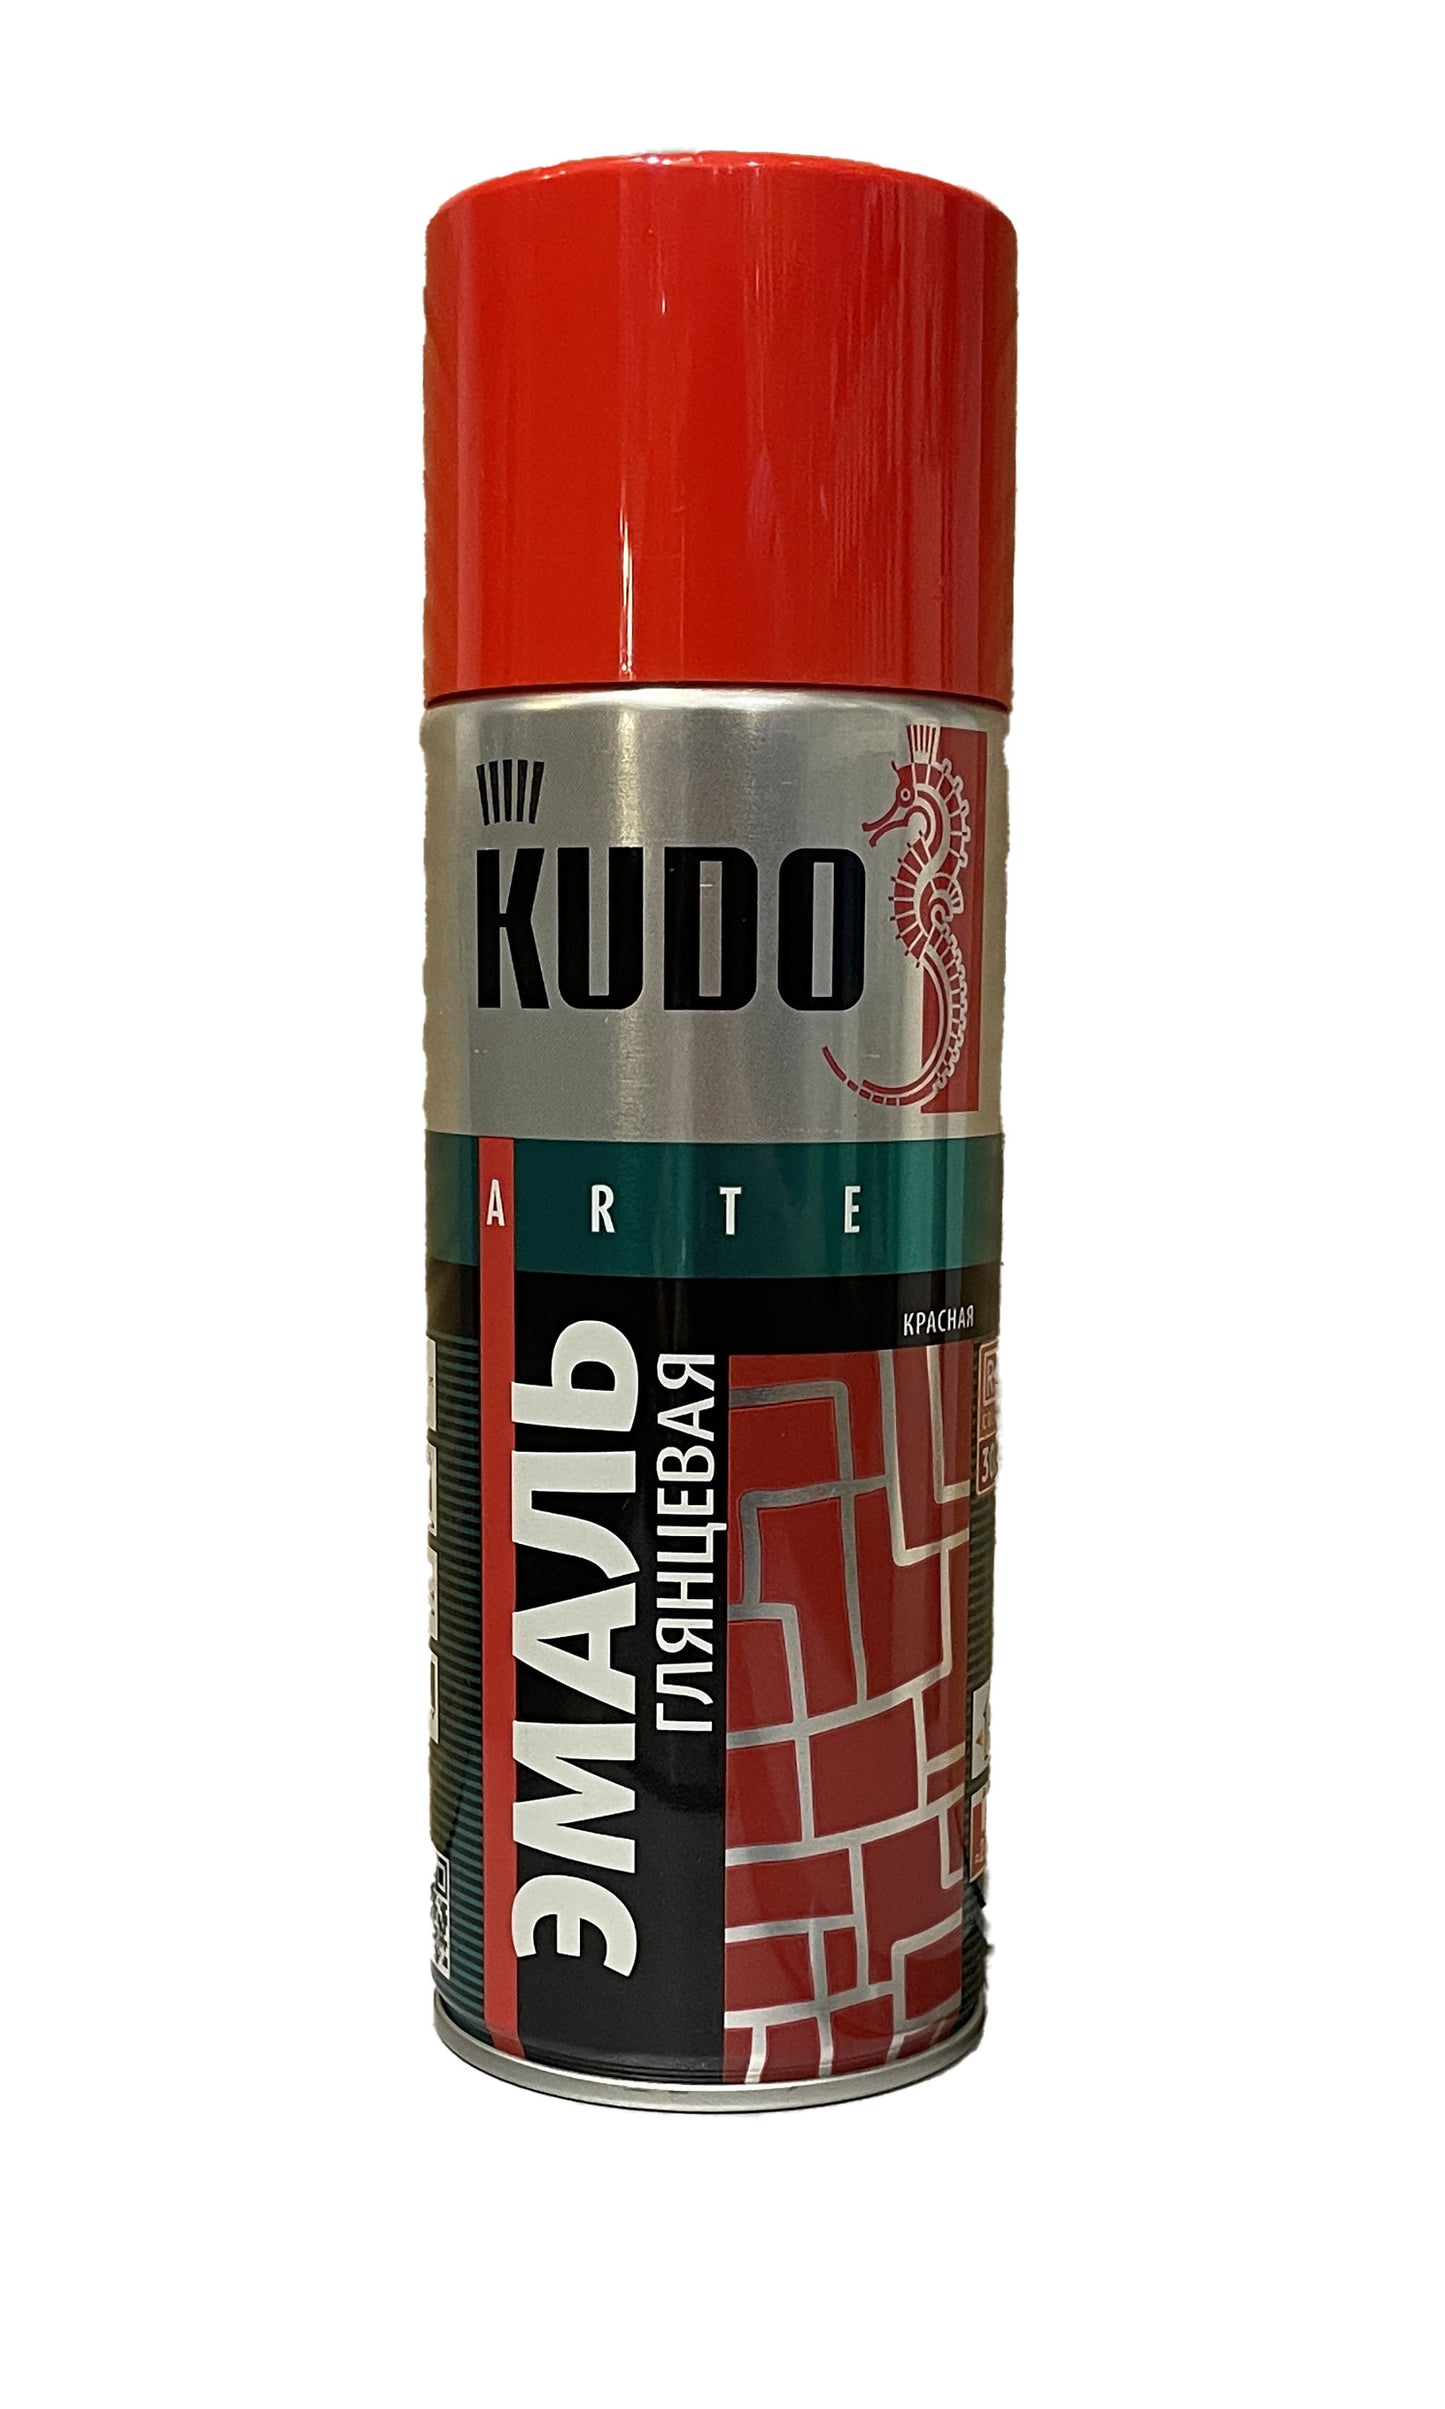 KU-1003 - аэрозольная алкидная эмаль, цвет: красный глянцевый RAL 3020, баллон: 520 мл.